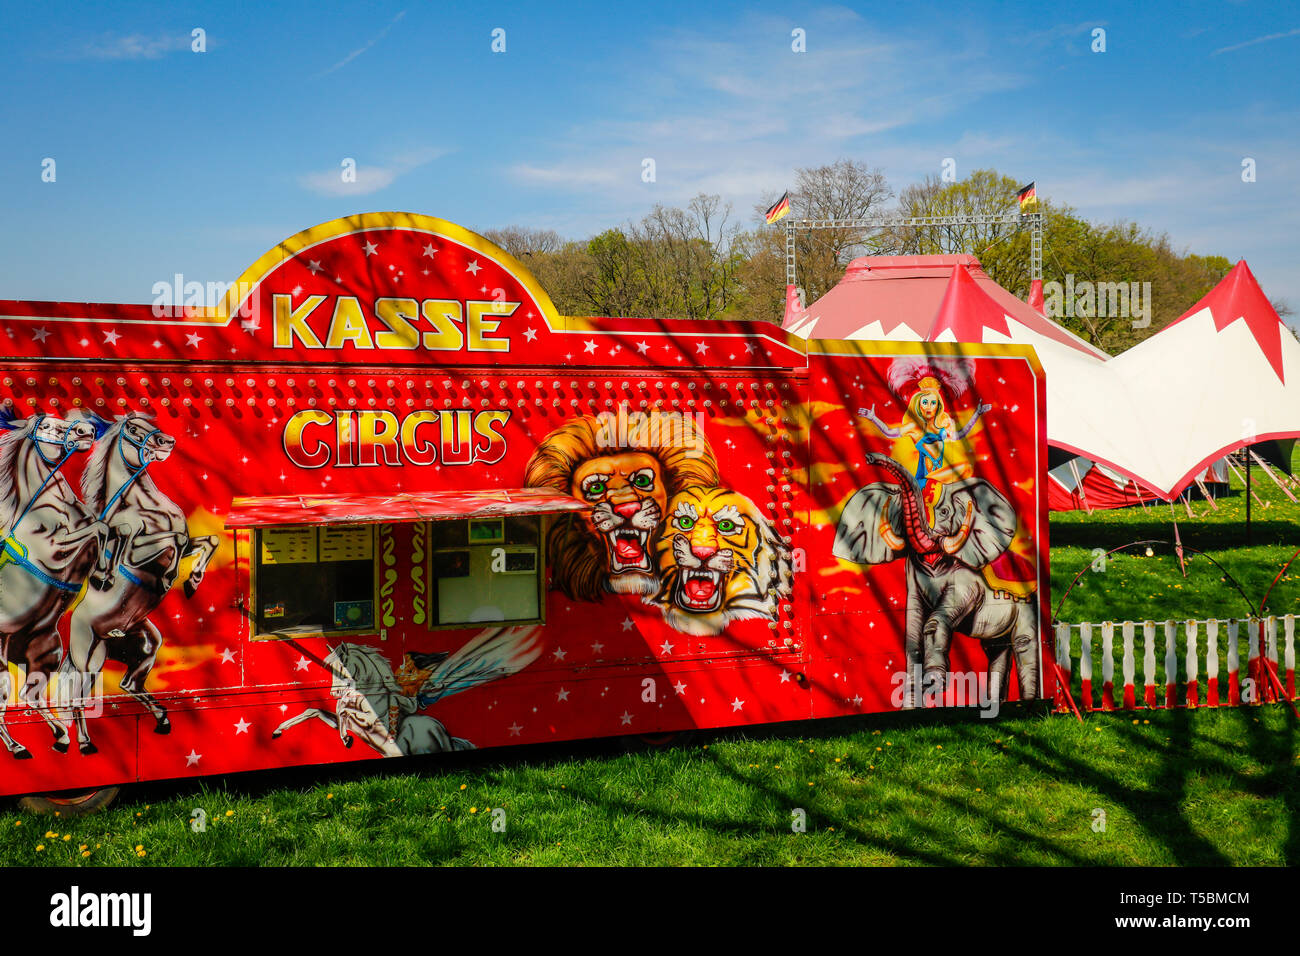 Deutschland - Circus, Circus Box Office und Zirkuszelt. Deutschland - Kasse  Themenbild Zirkus, Zirkus und Zirkuszelt Stockfotografie - Alamy